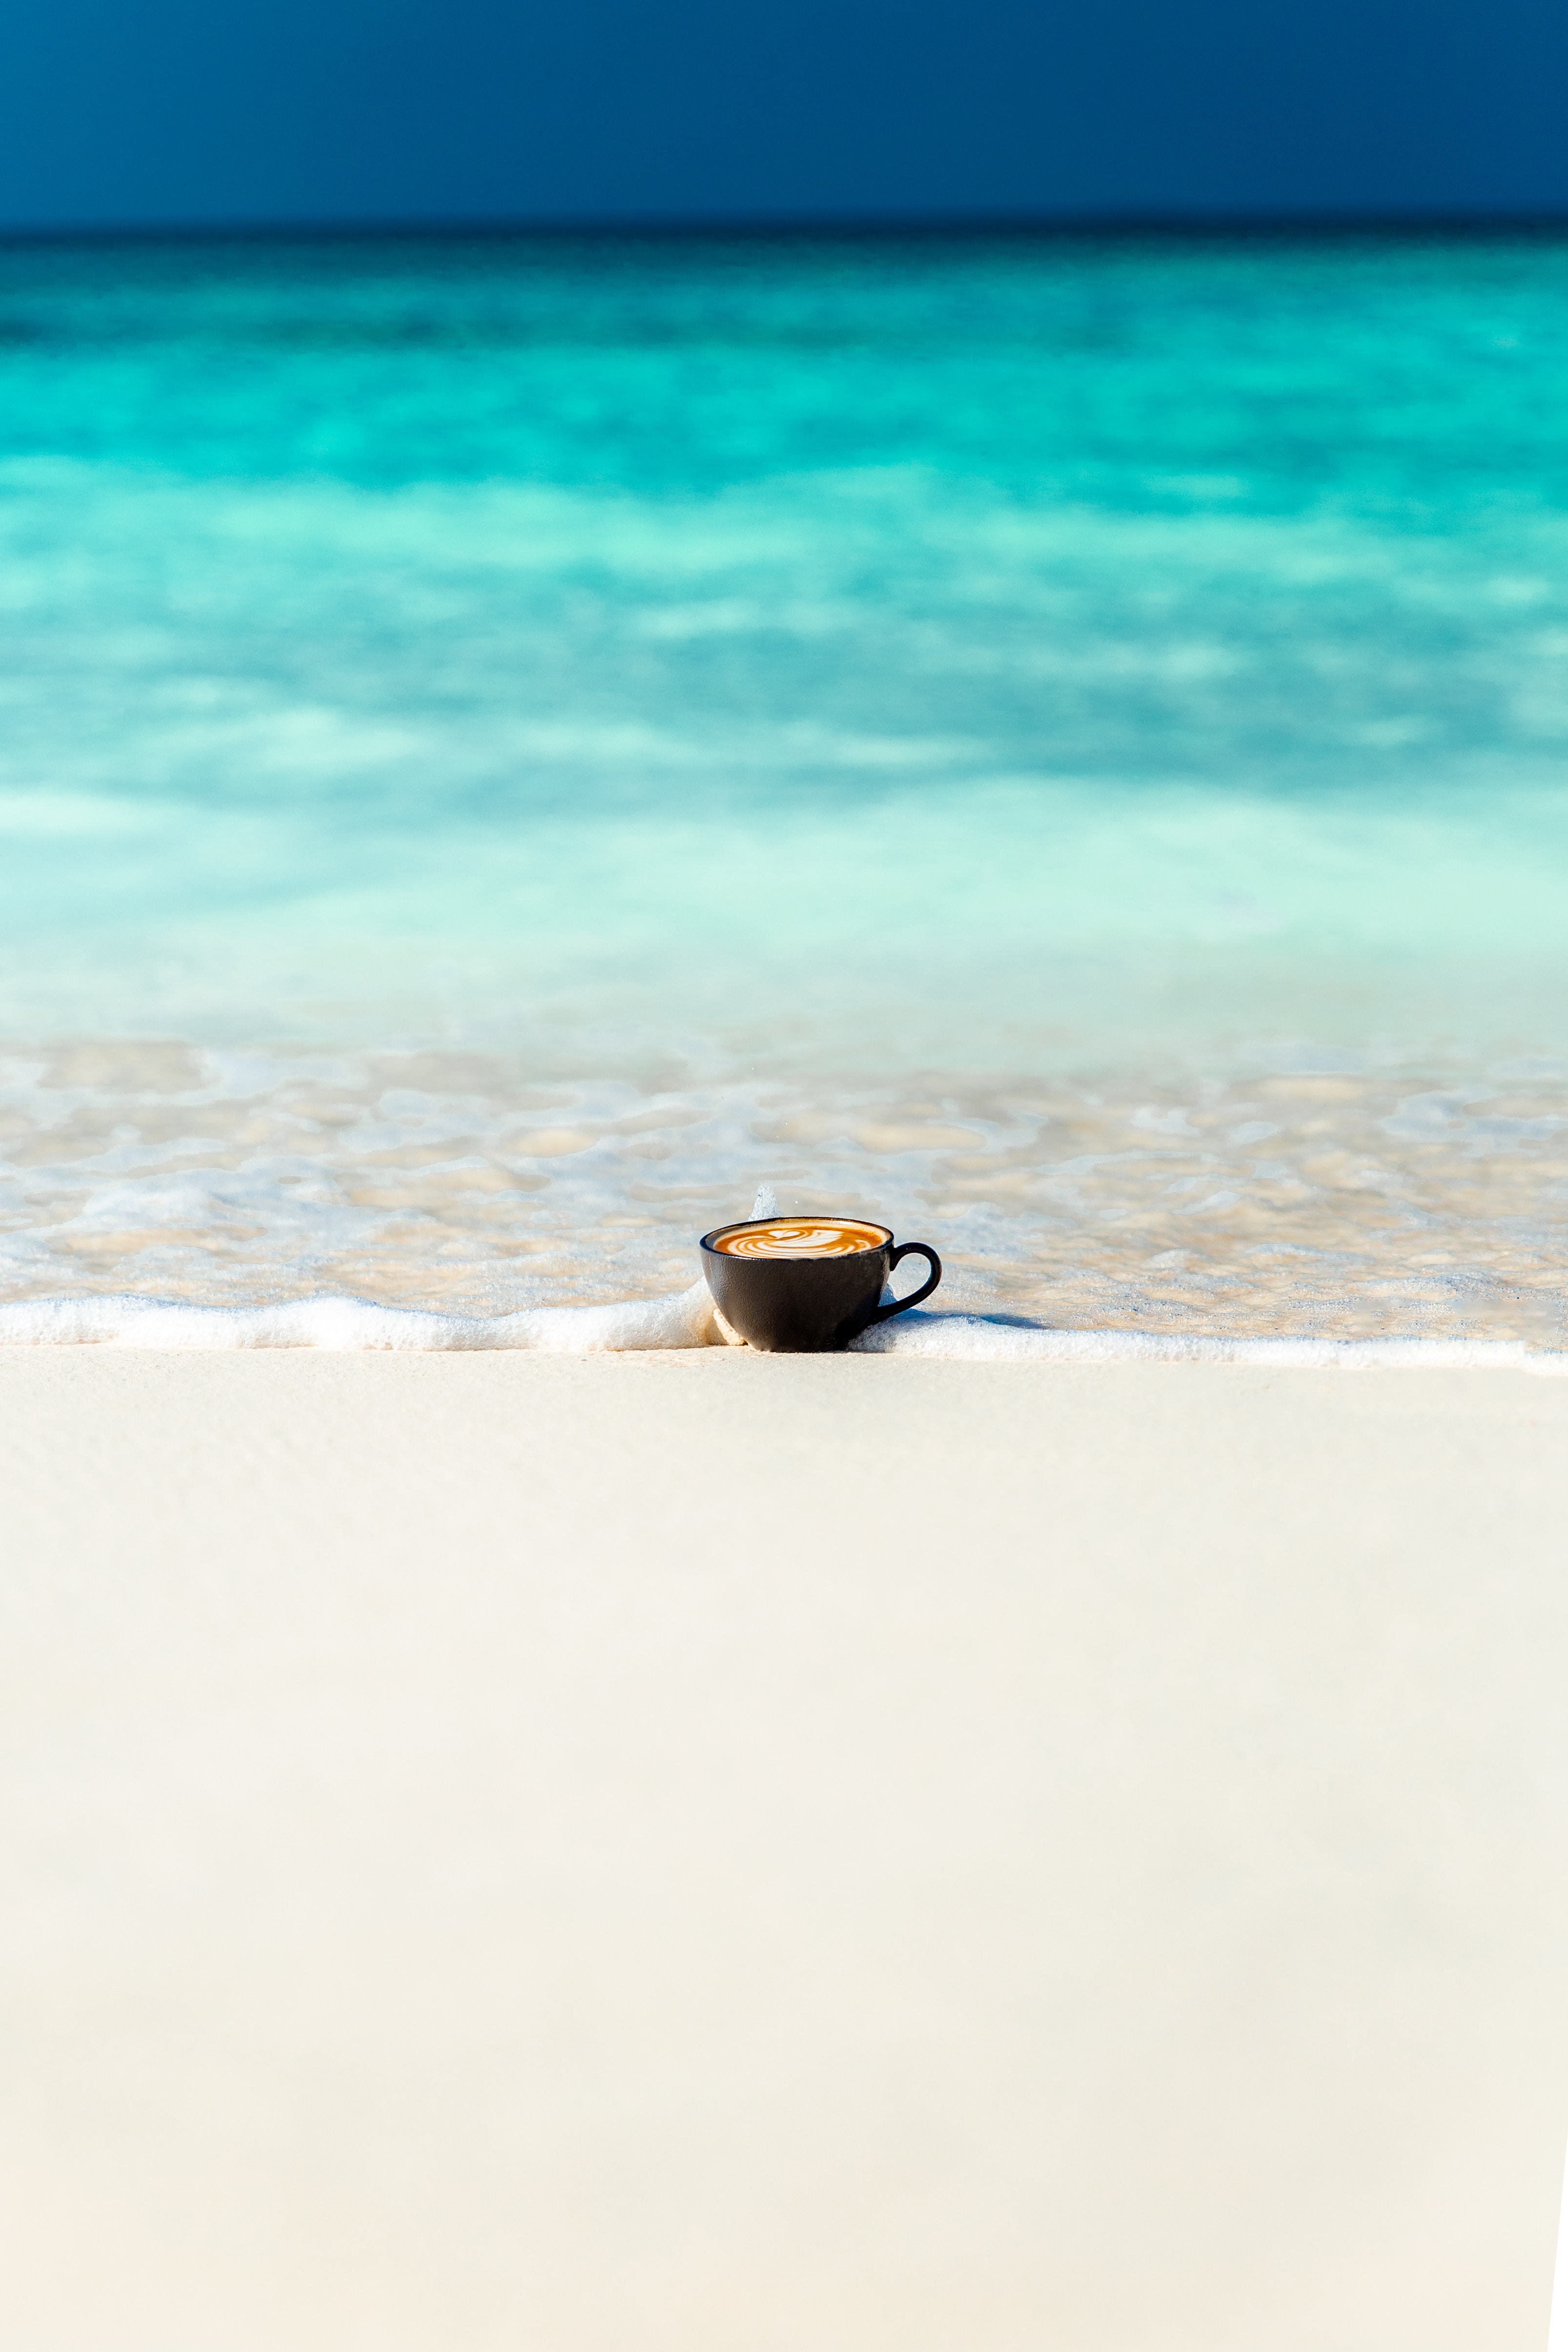 bank, minimalism, sand, shore, cup, ocean